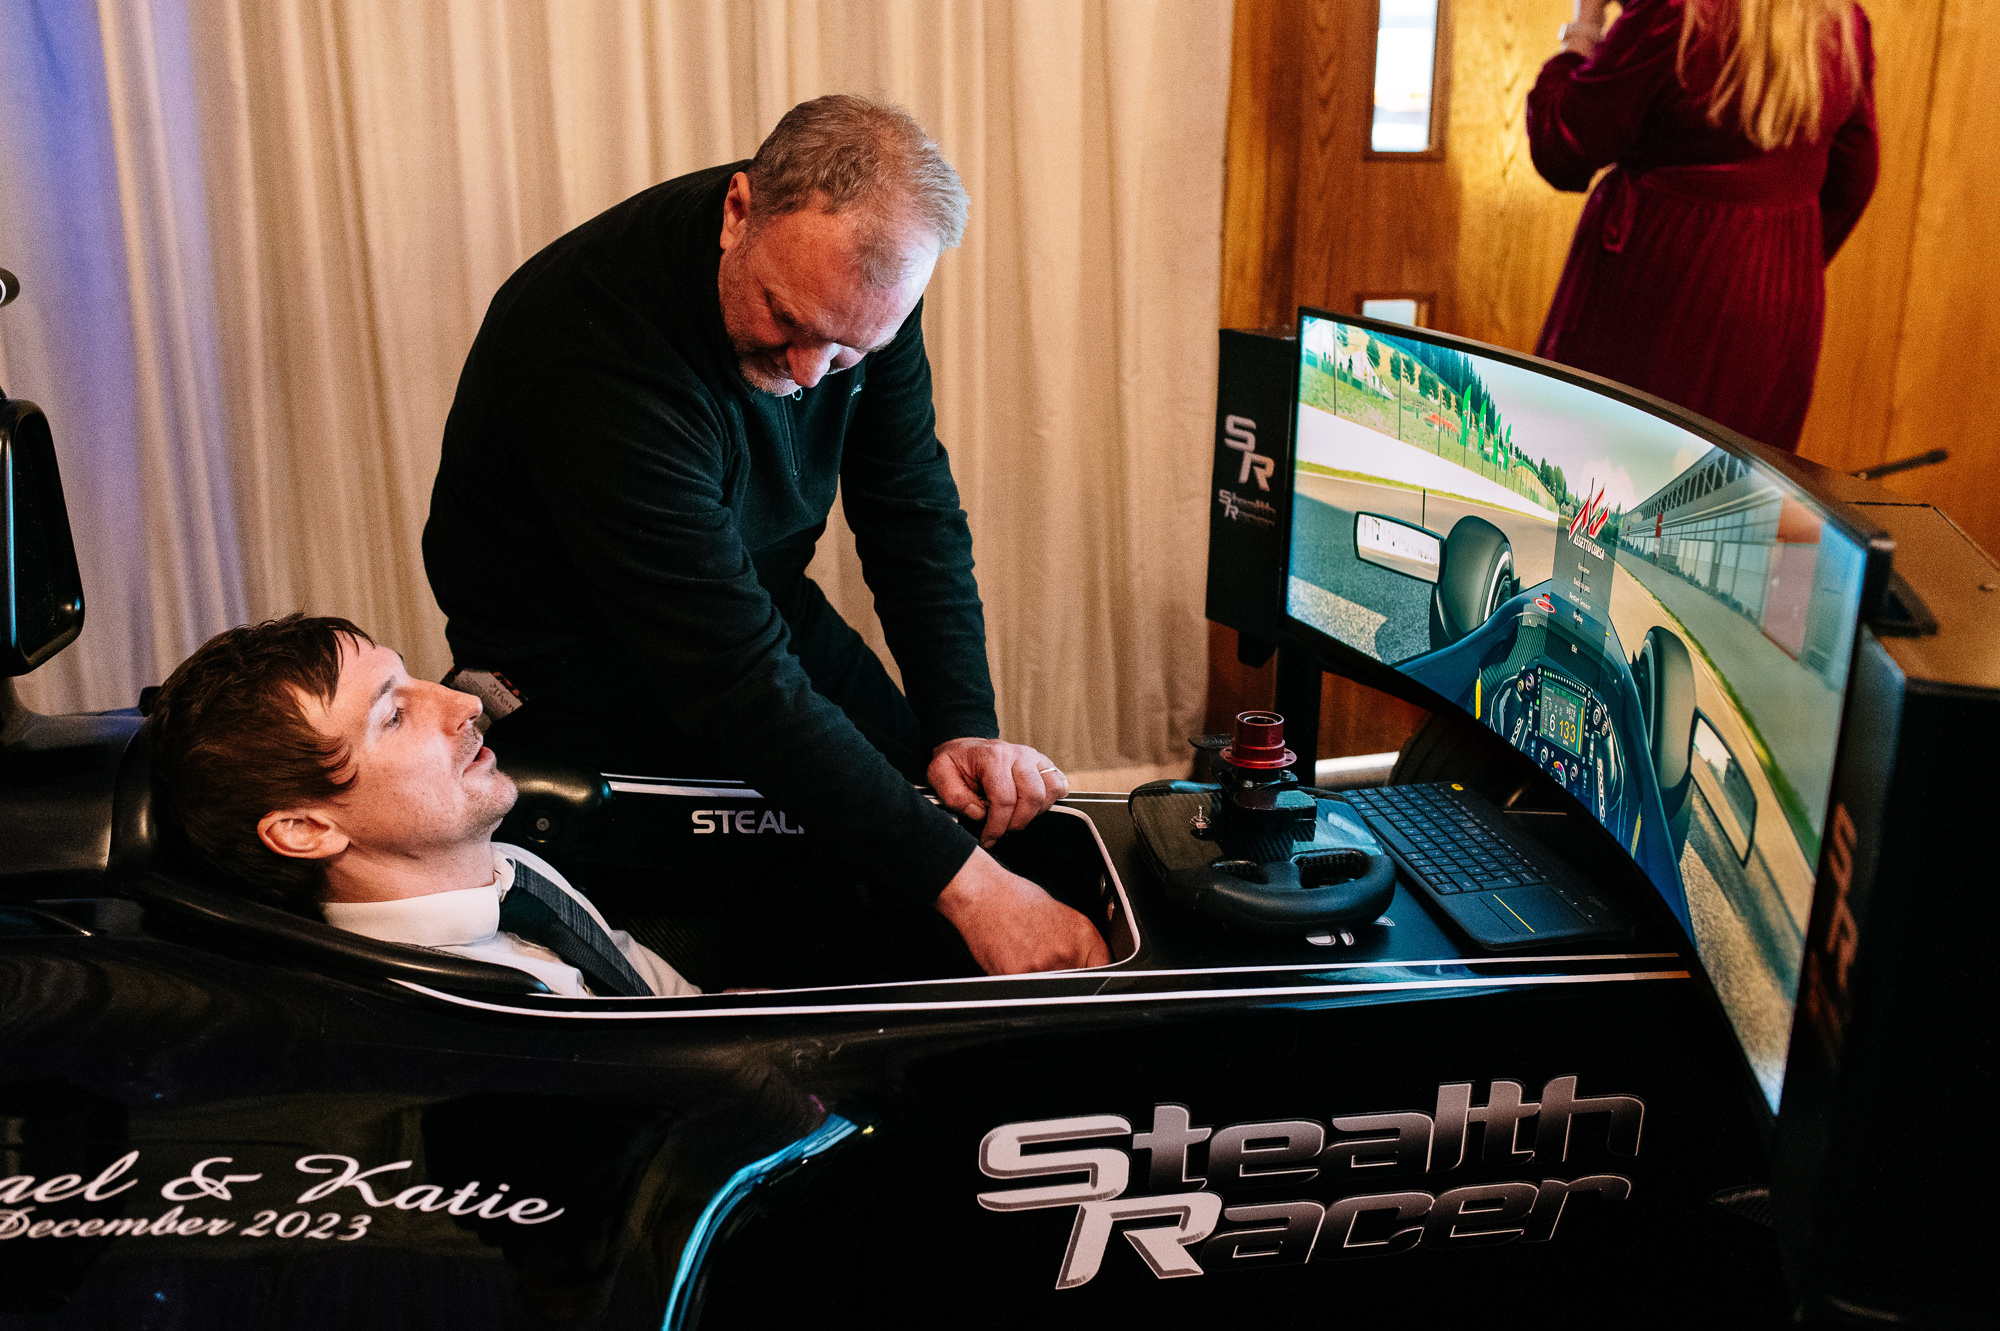 F1 simulator at weddings